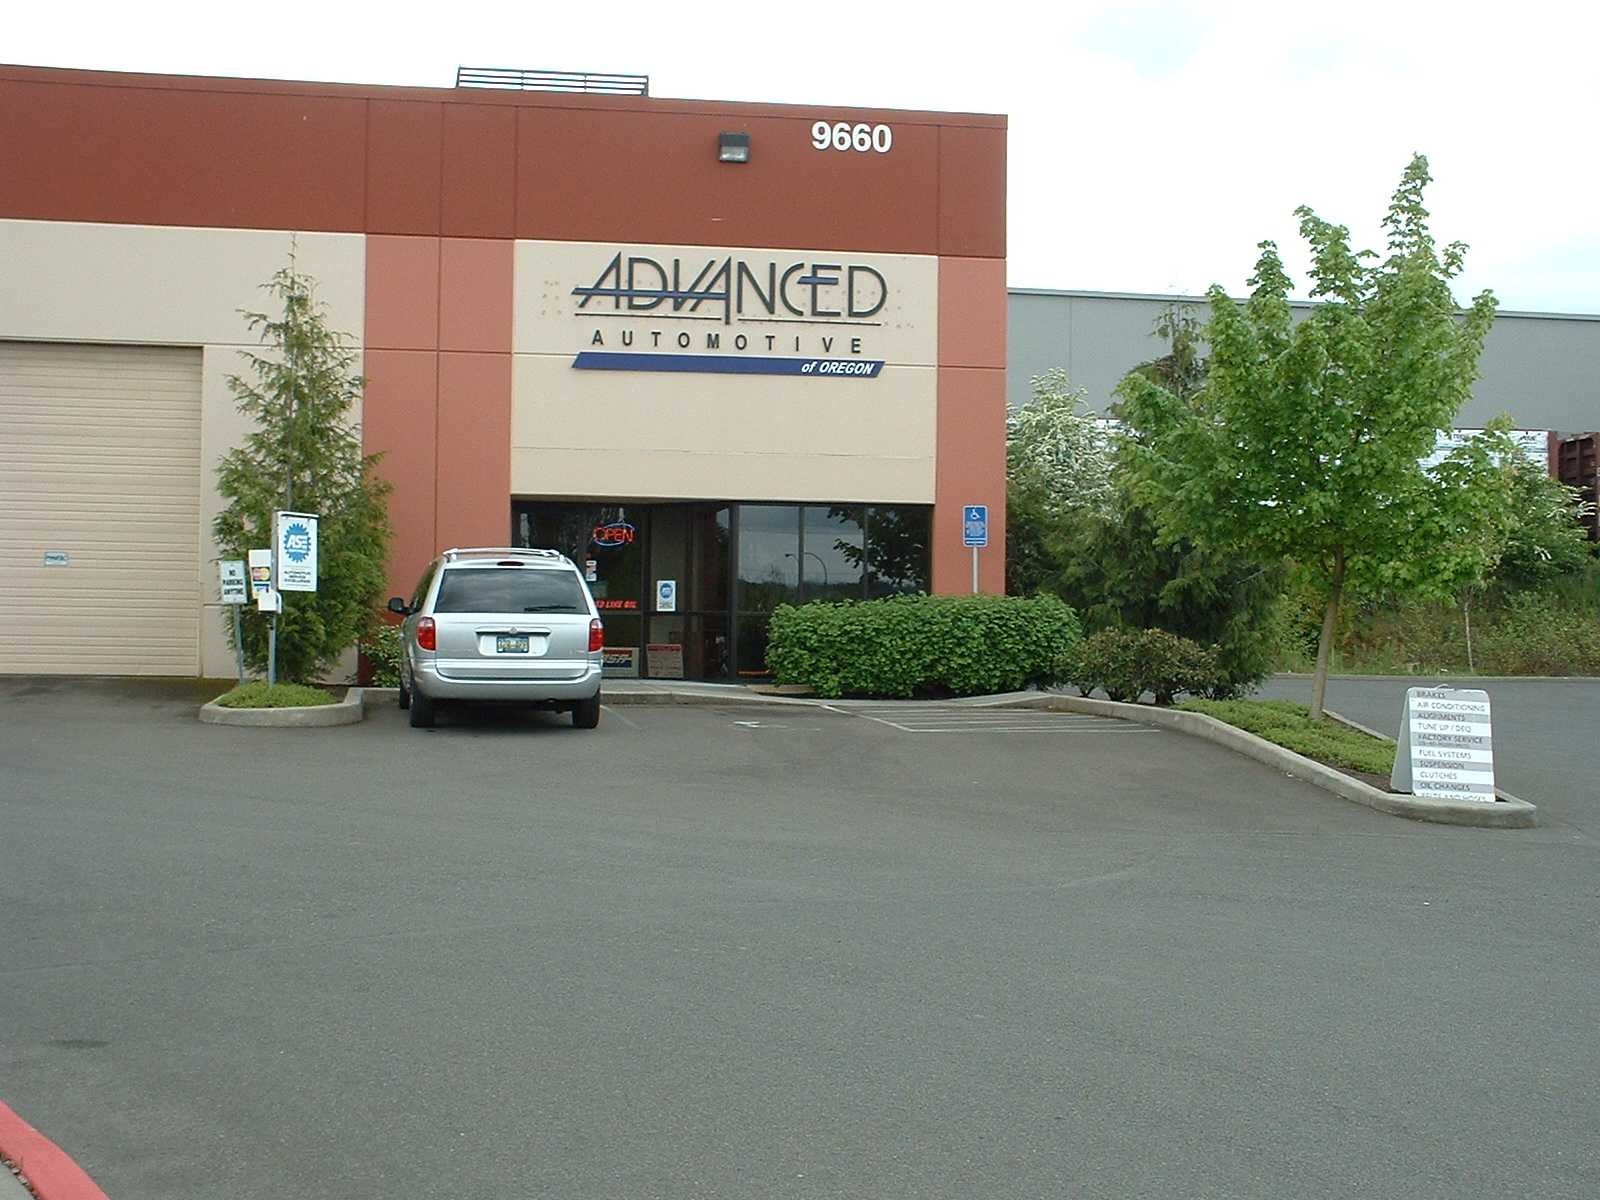 Advanced Automotive of Oregon